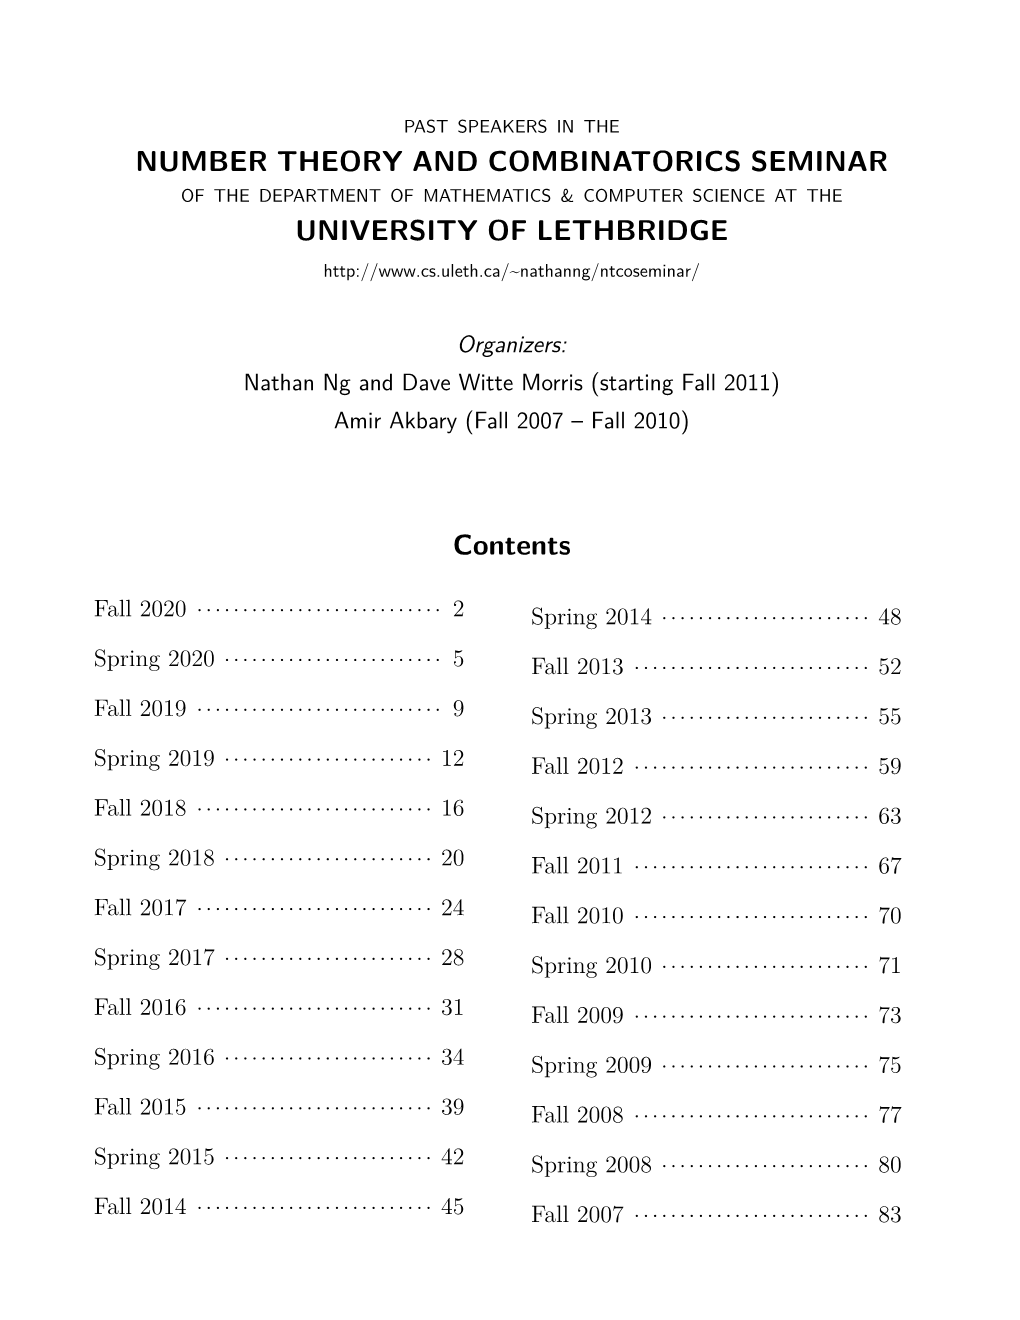 NUMBER THEORY and COMBINATORICS SEMINAR UNIVERSITY of LETHBRIDGE Contents